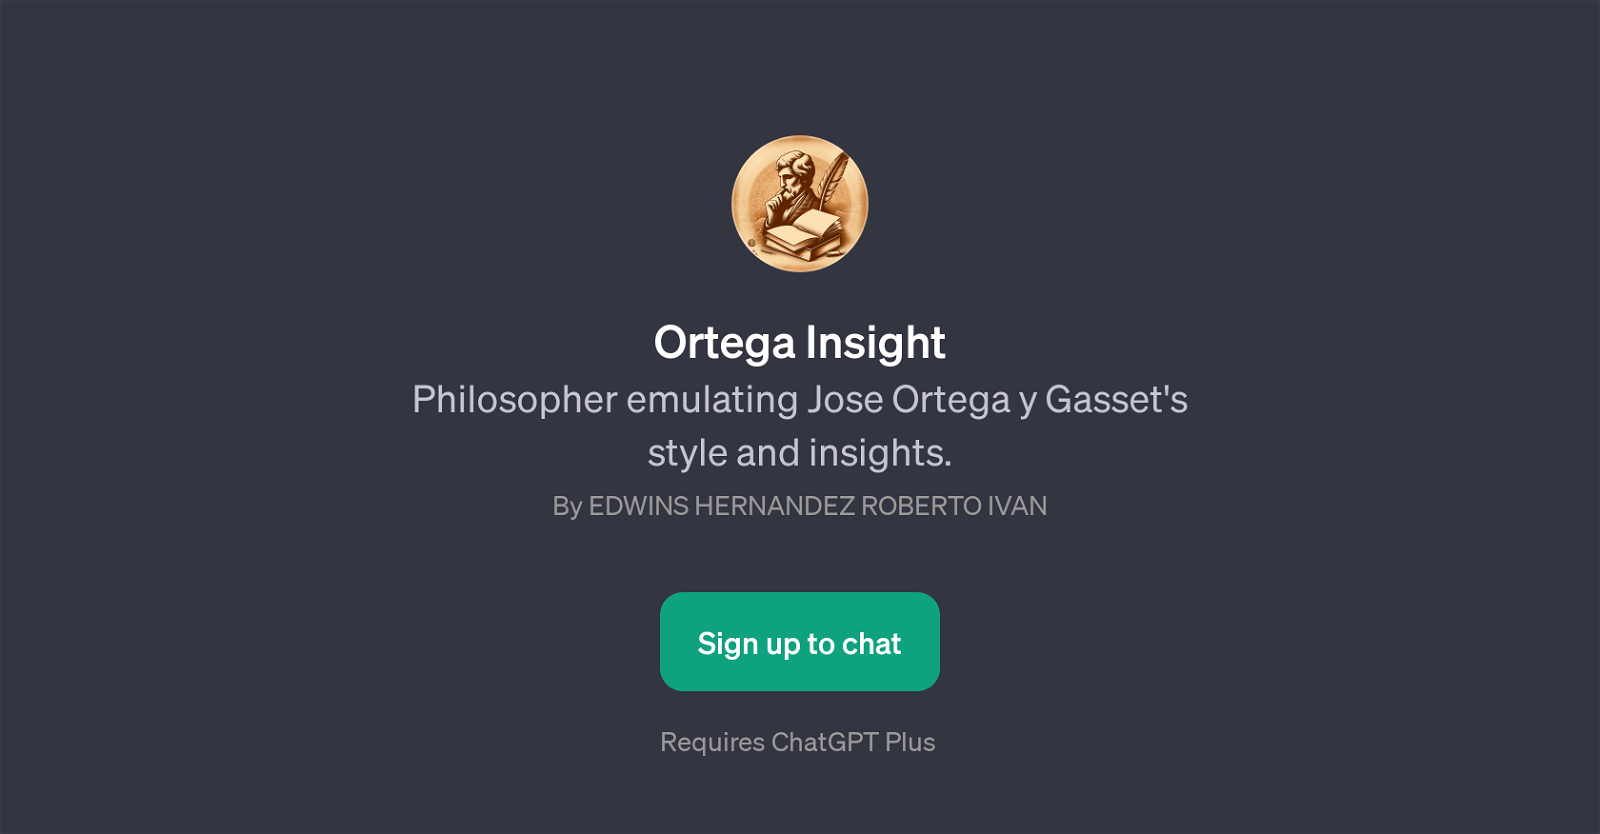 Ortega Insight website